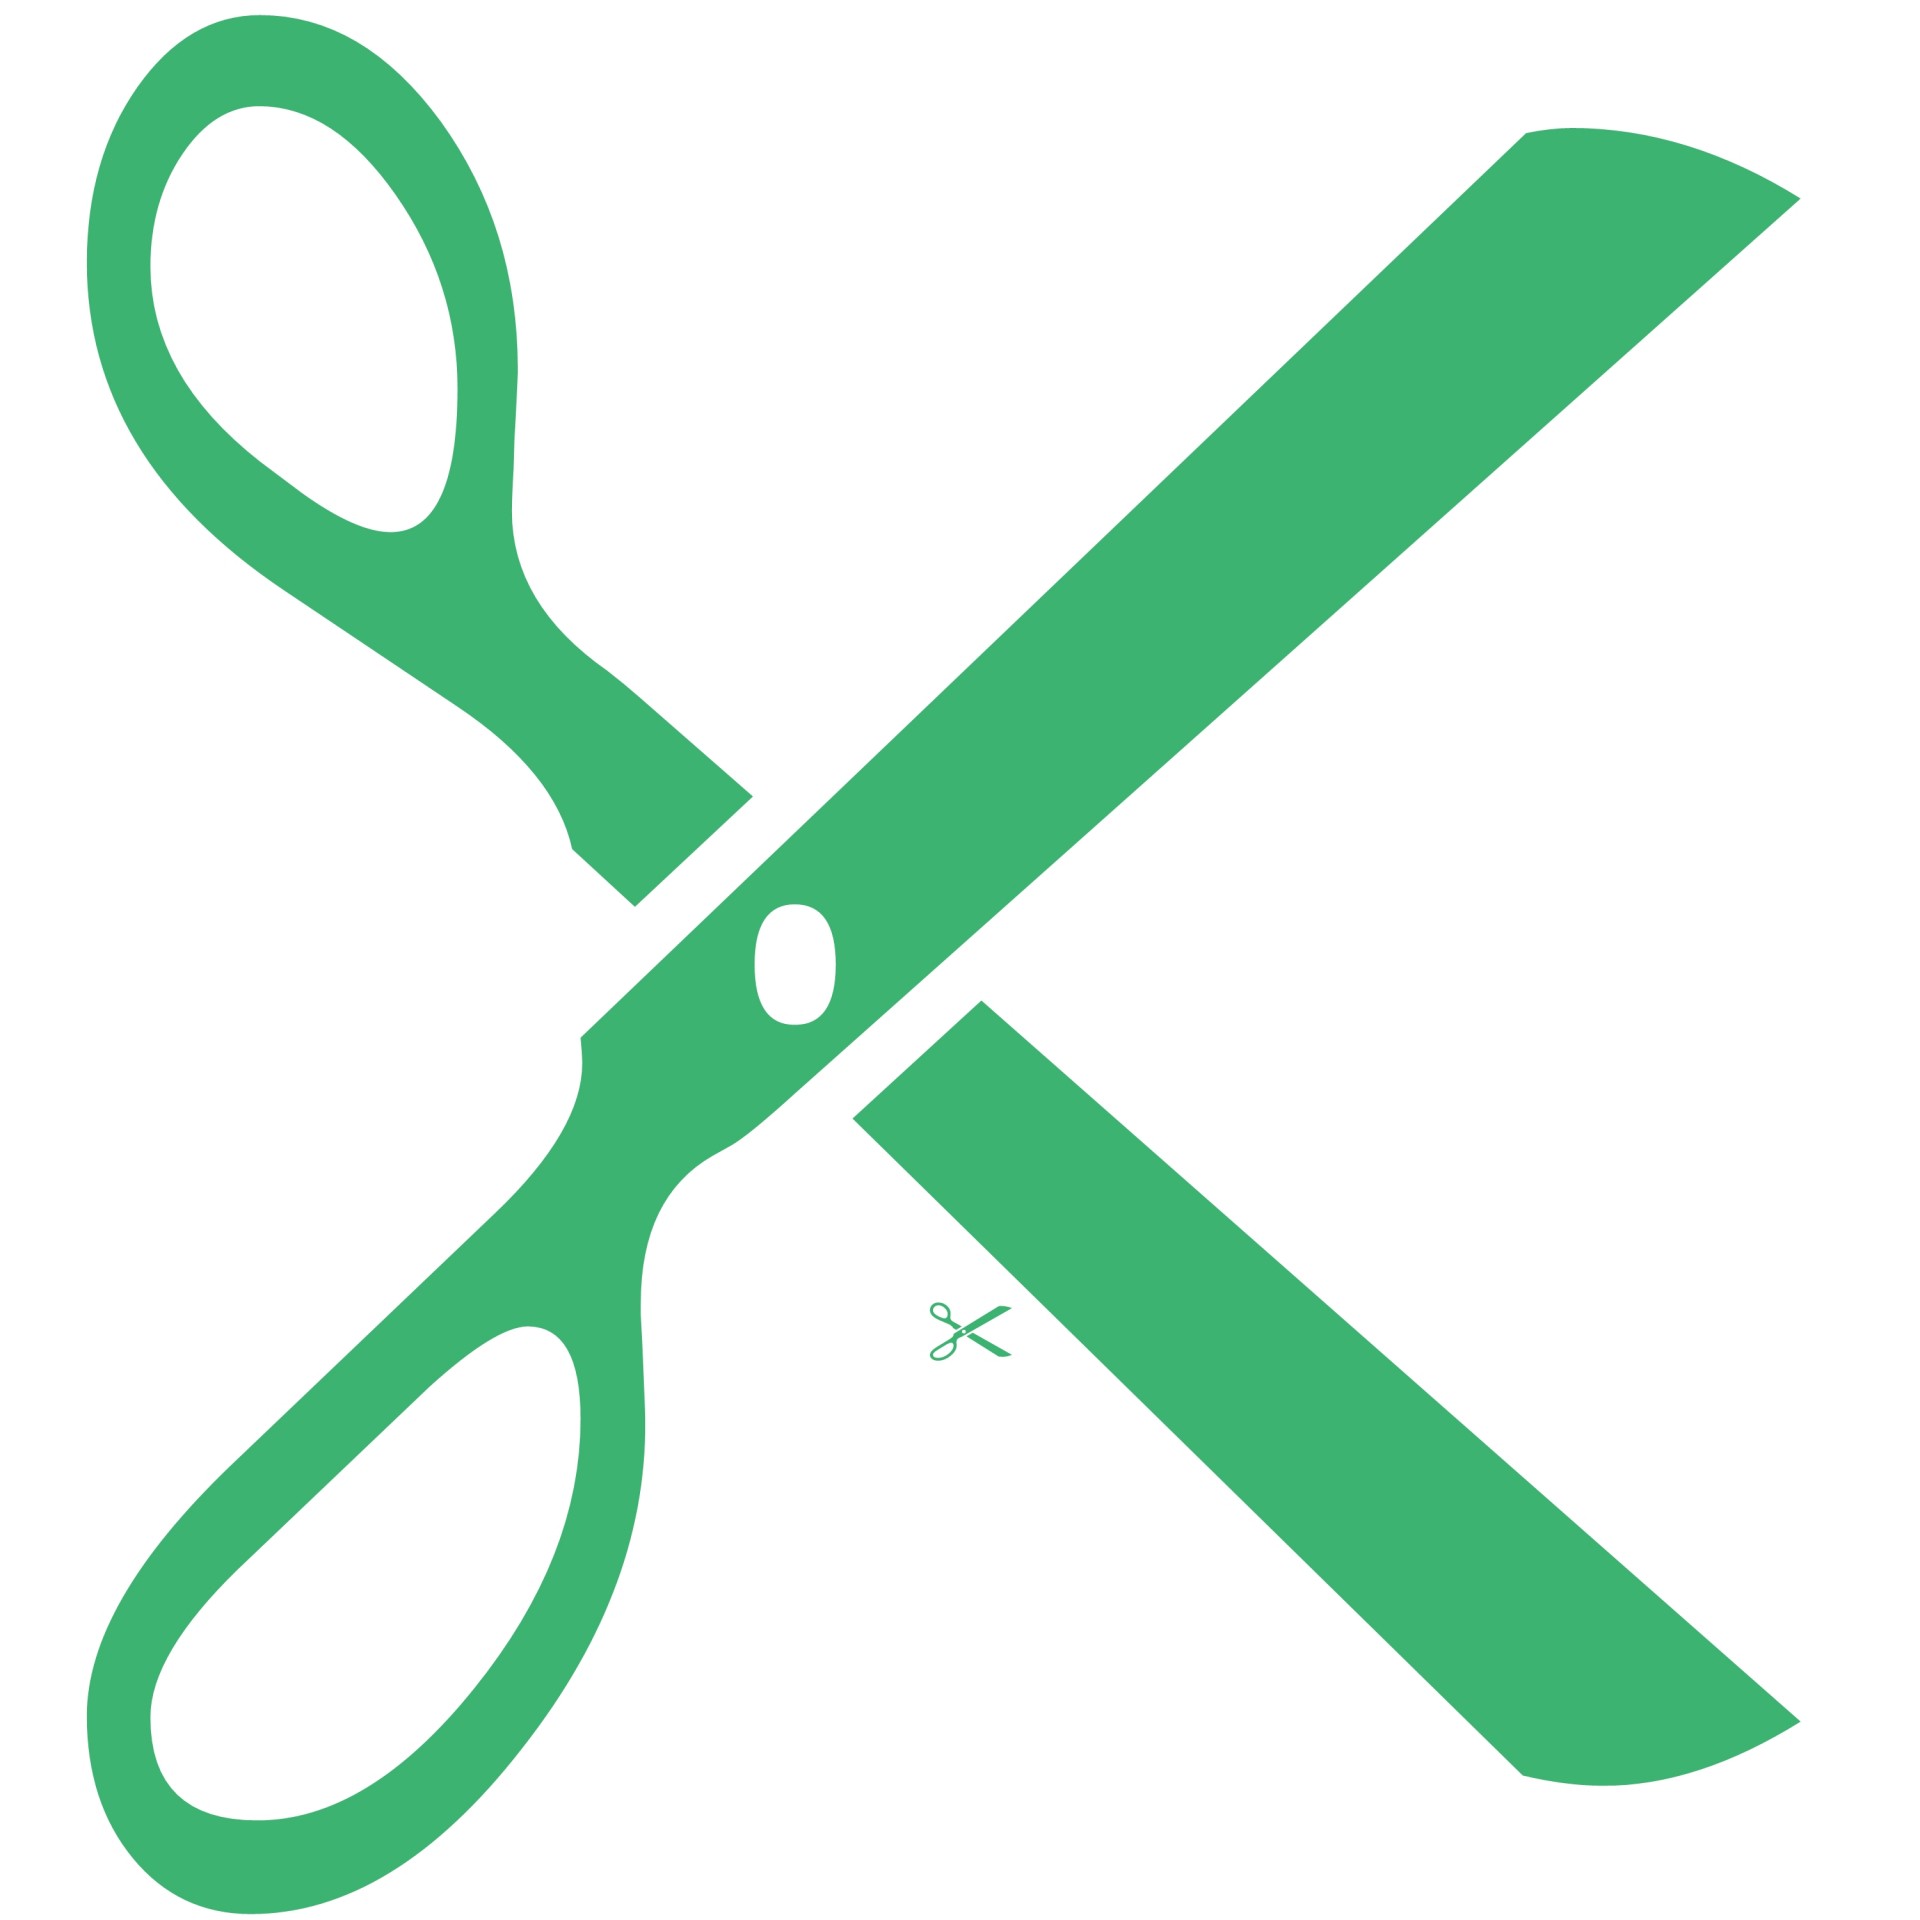 green scissors drawing free photo